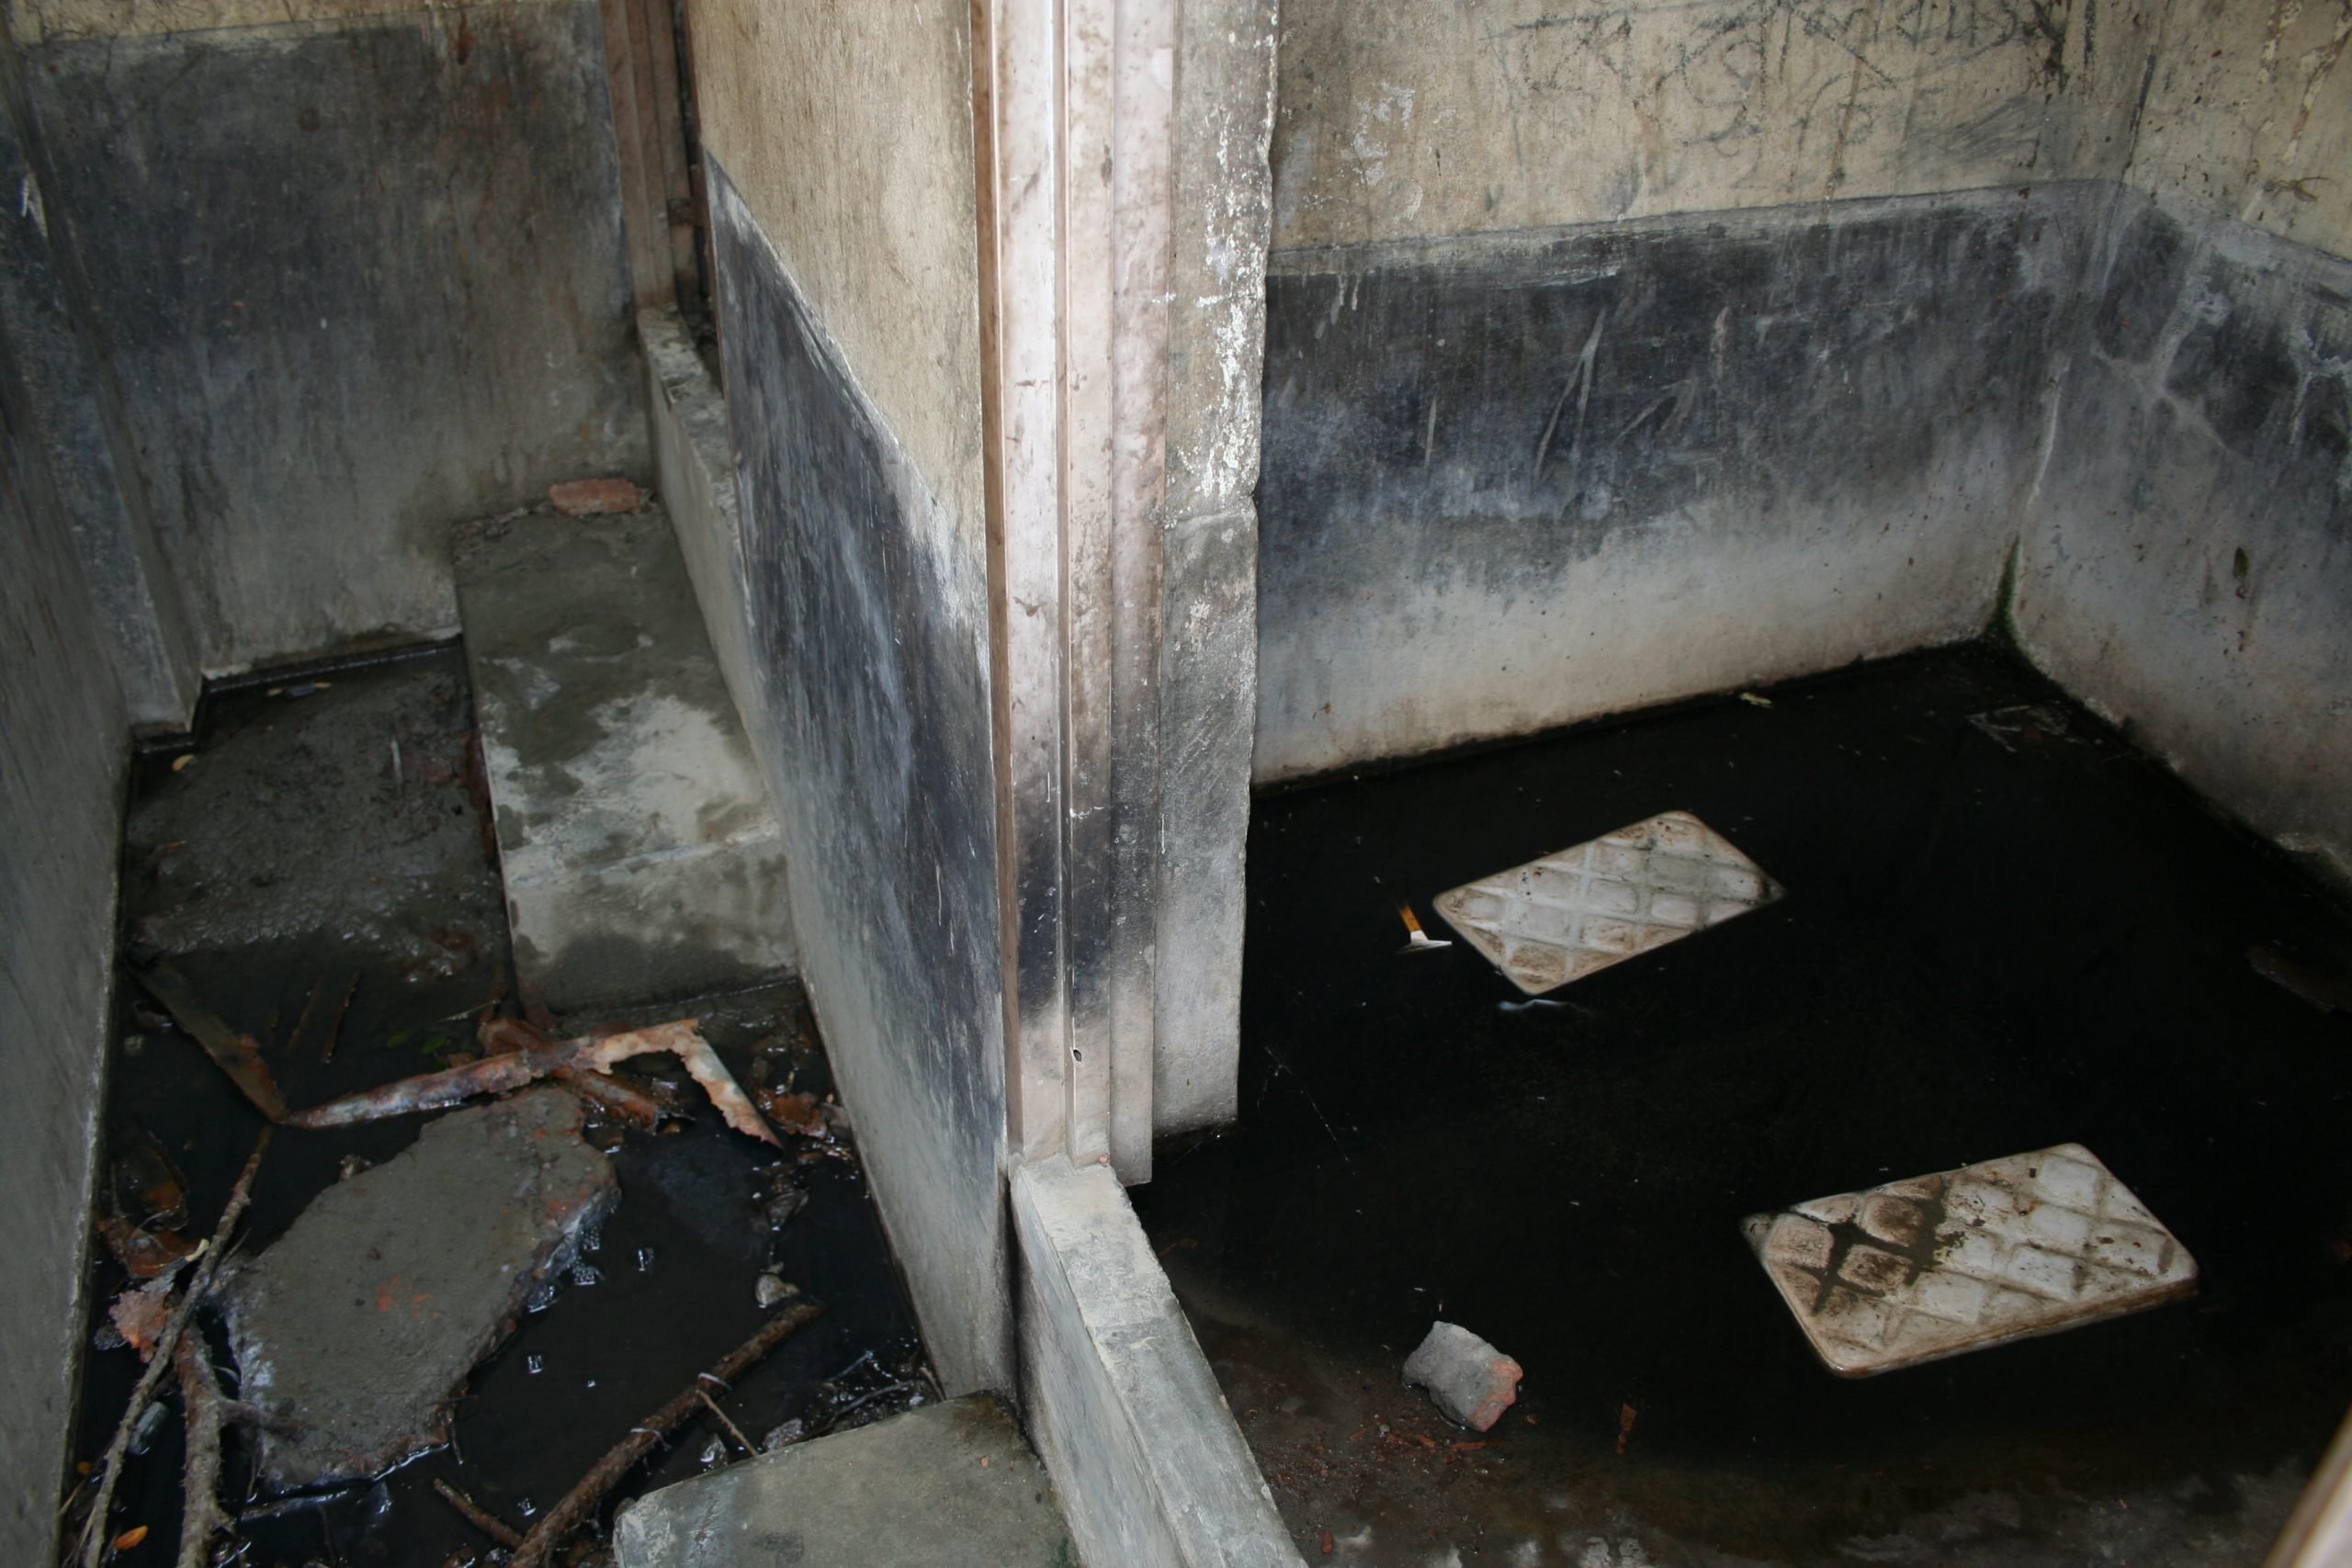 Bangladesh toilets